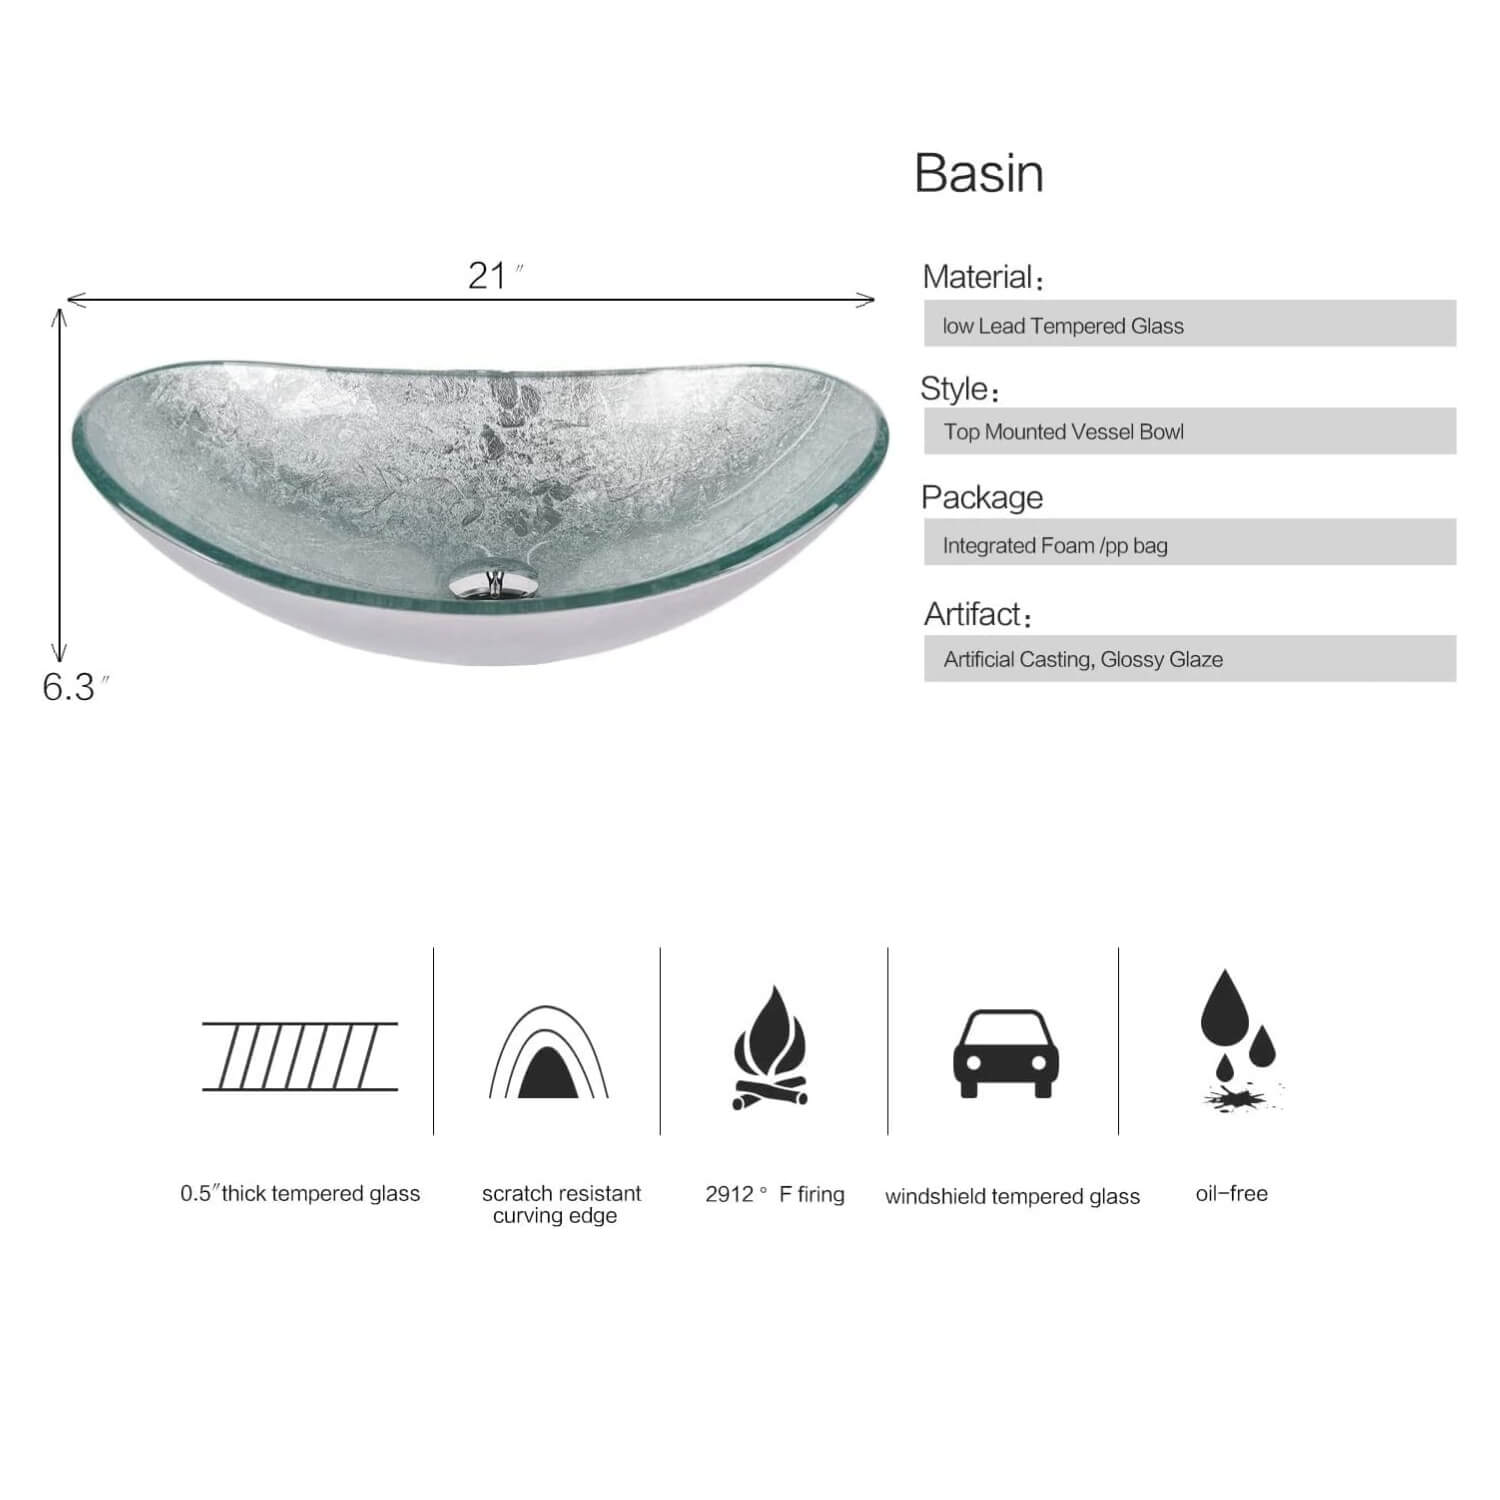 Elecwish silver boat sink basin specification